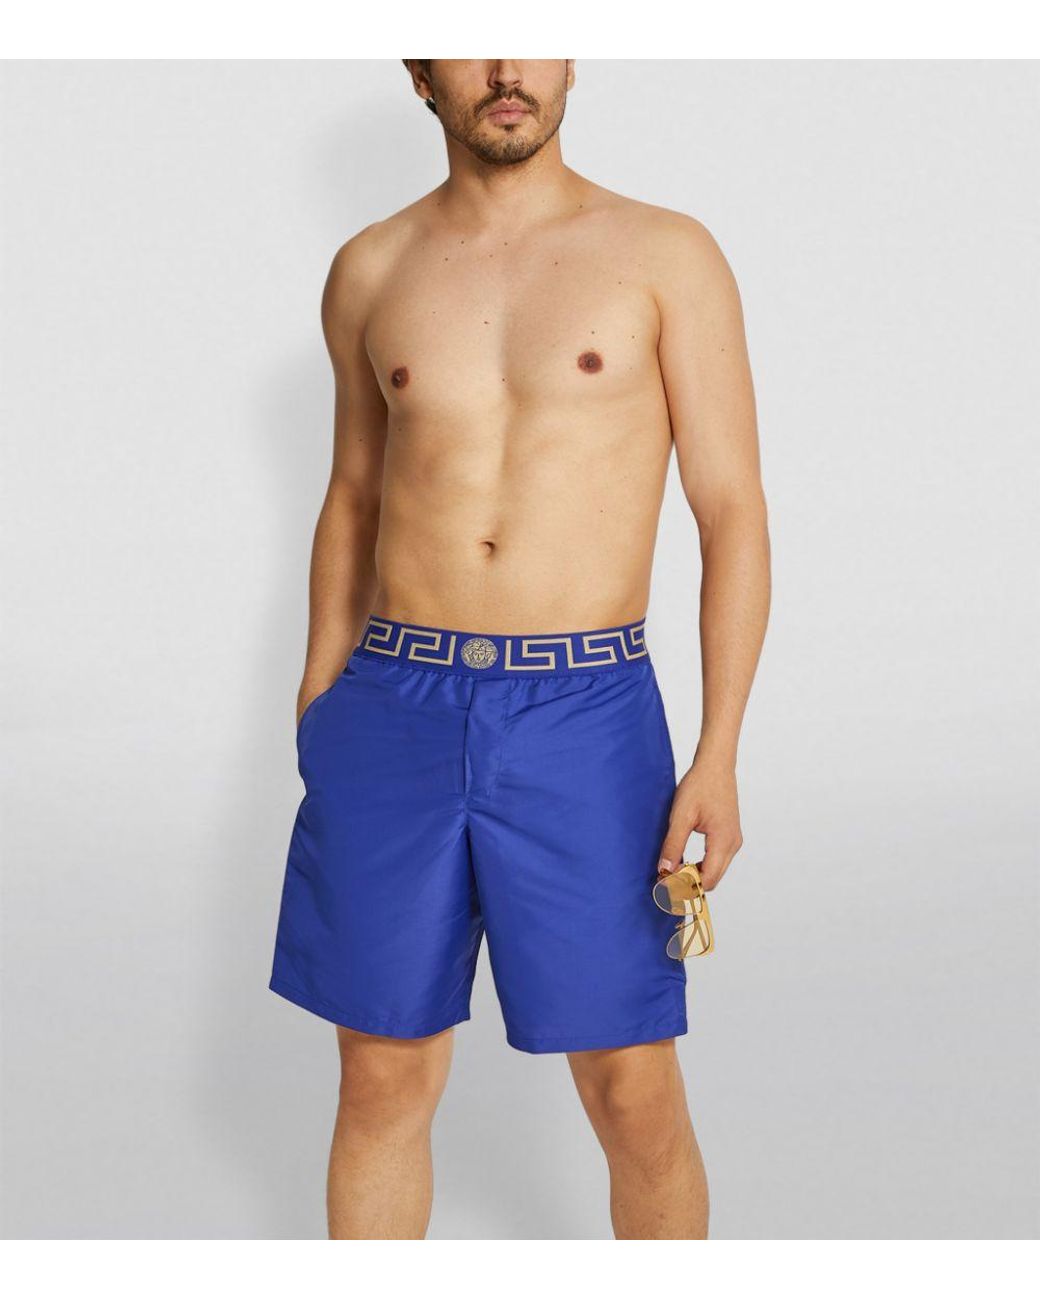 versace shorts blue